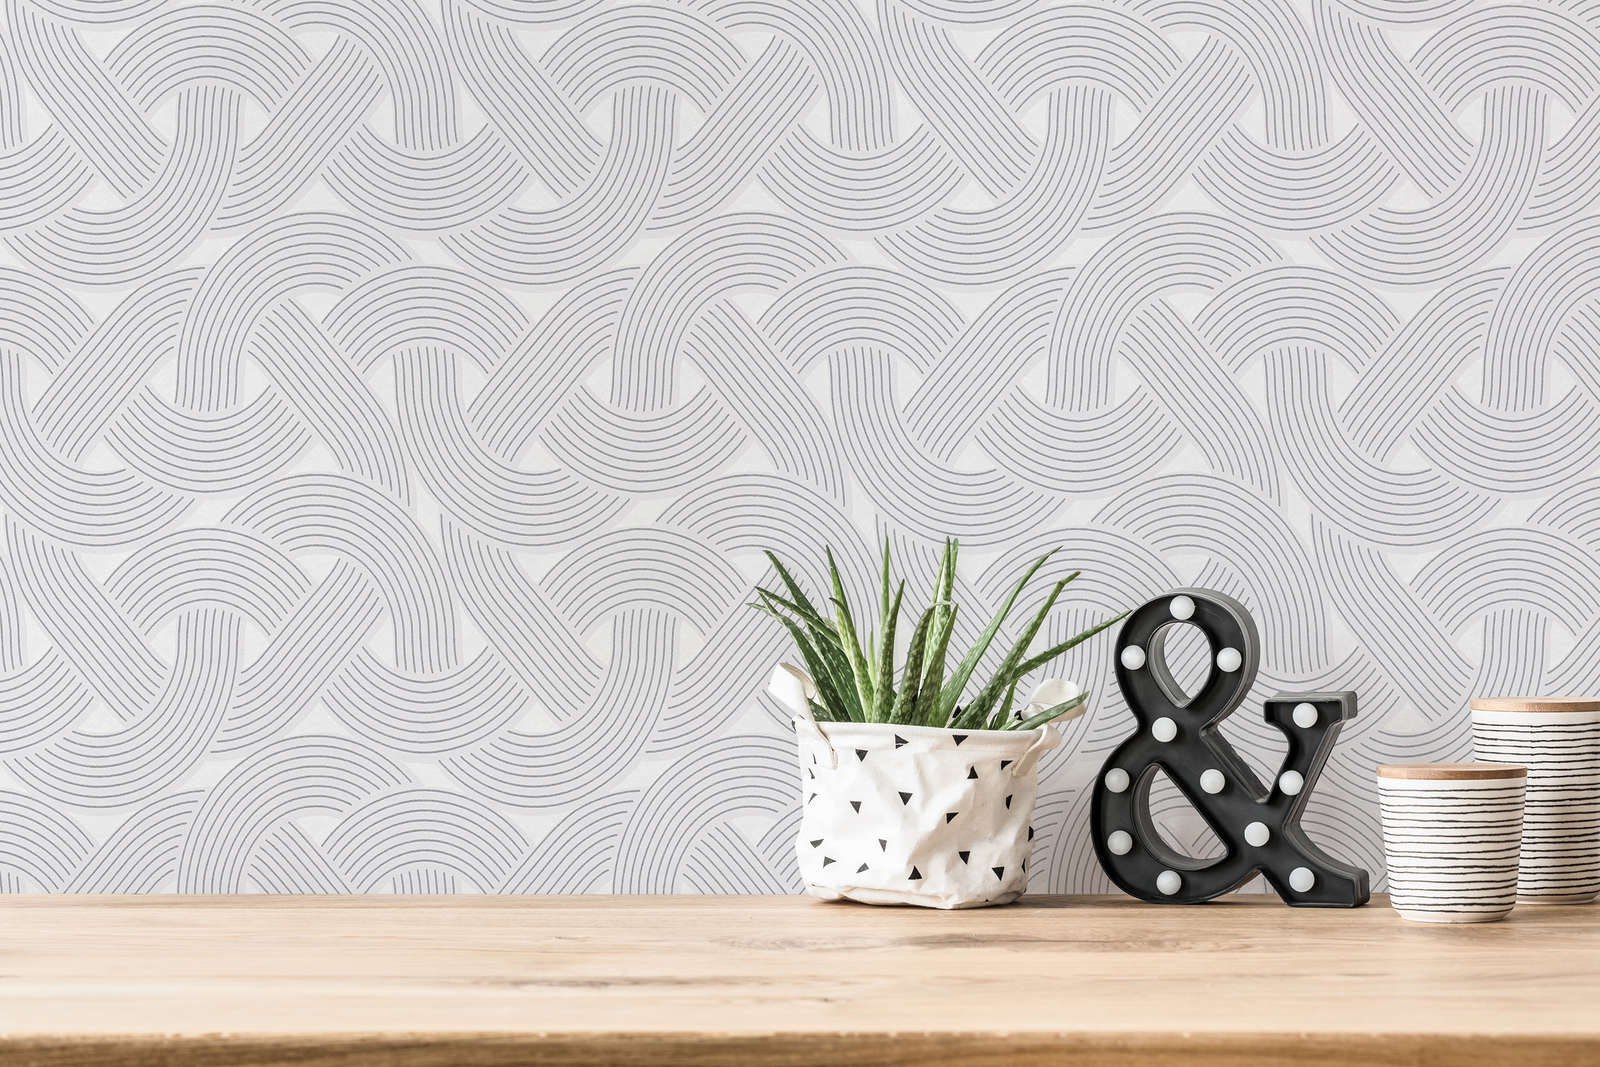             Non-woven wallpaper in graphic line pattern - grey, silver, white
        